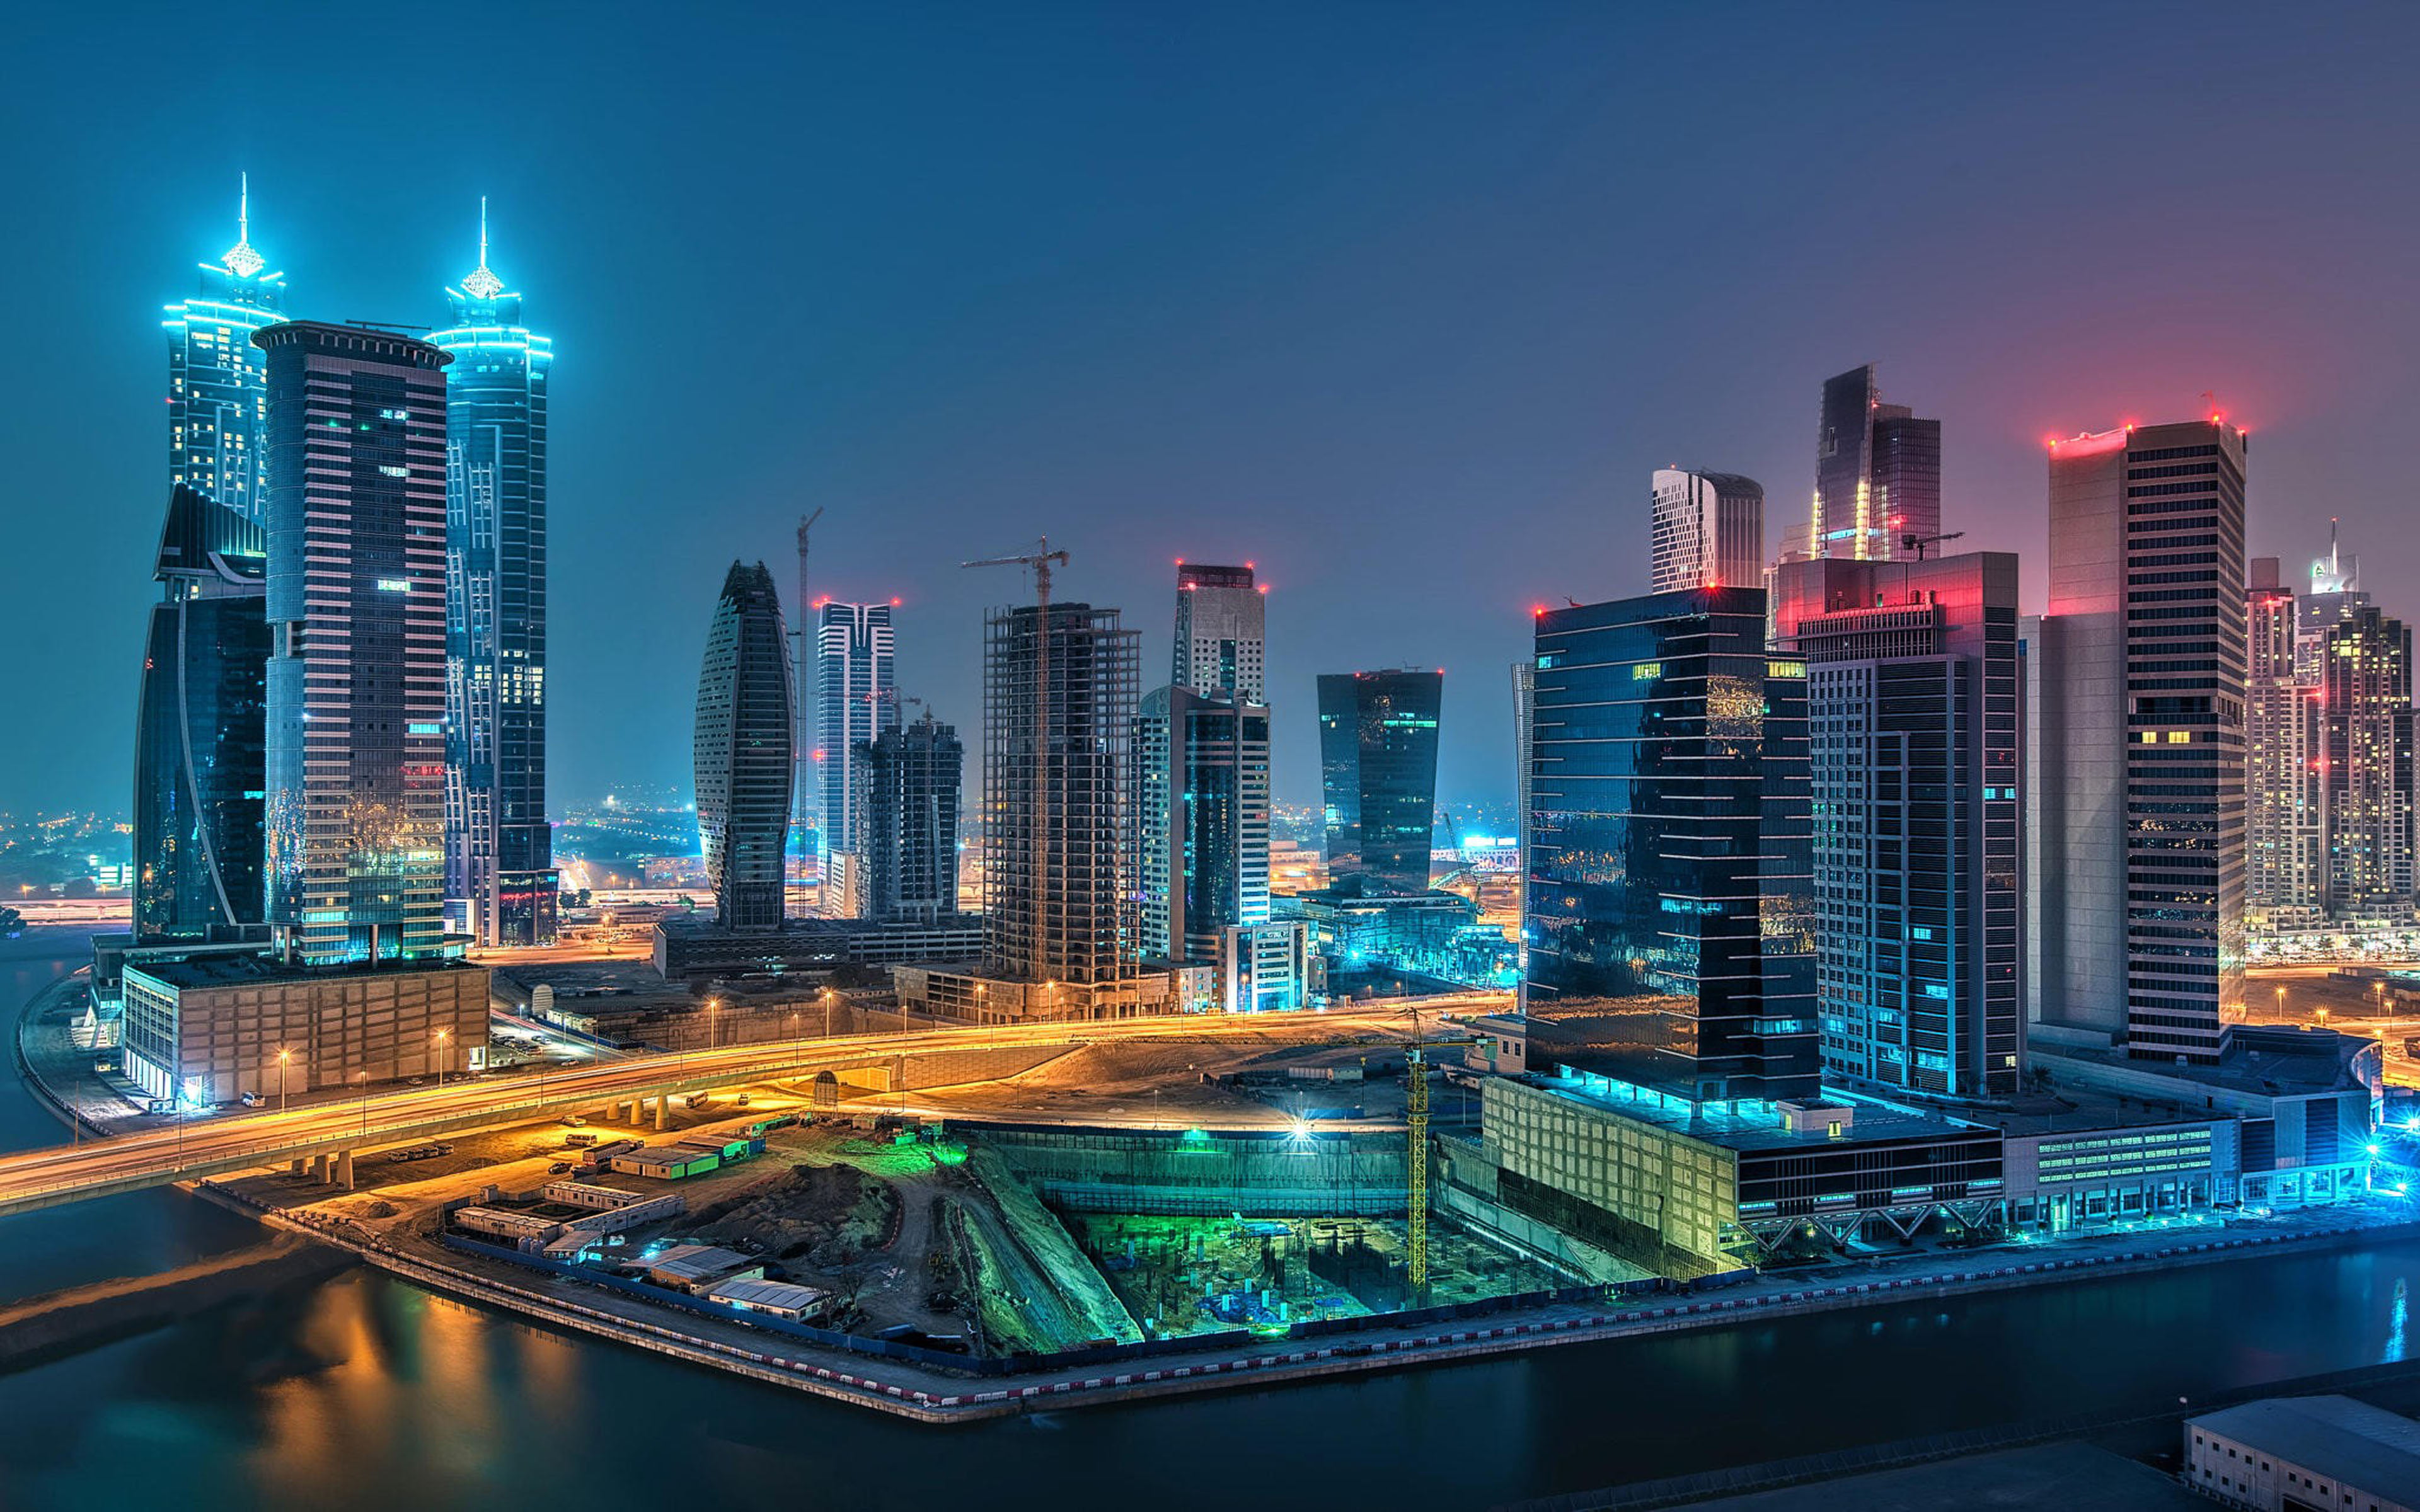 Dubai United Arab Emirates Cityscape Roads Night Lights Concrete Buildings Wallpaper For Desktop Mobile Phones And Computer 3840×2400